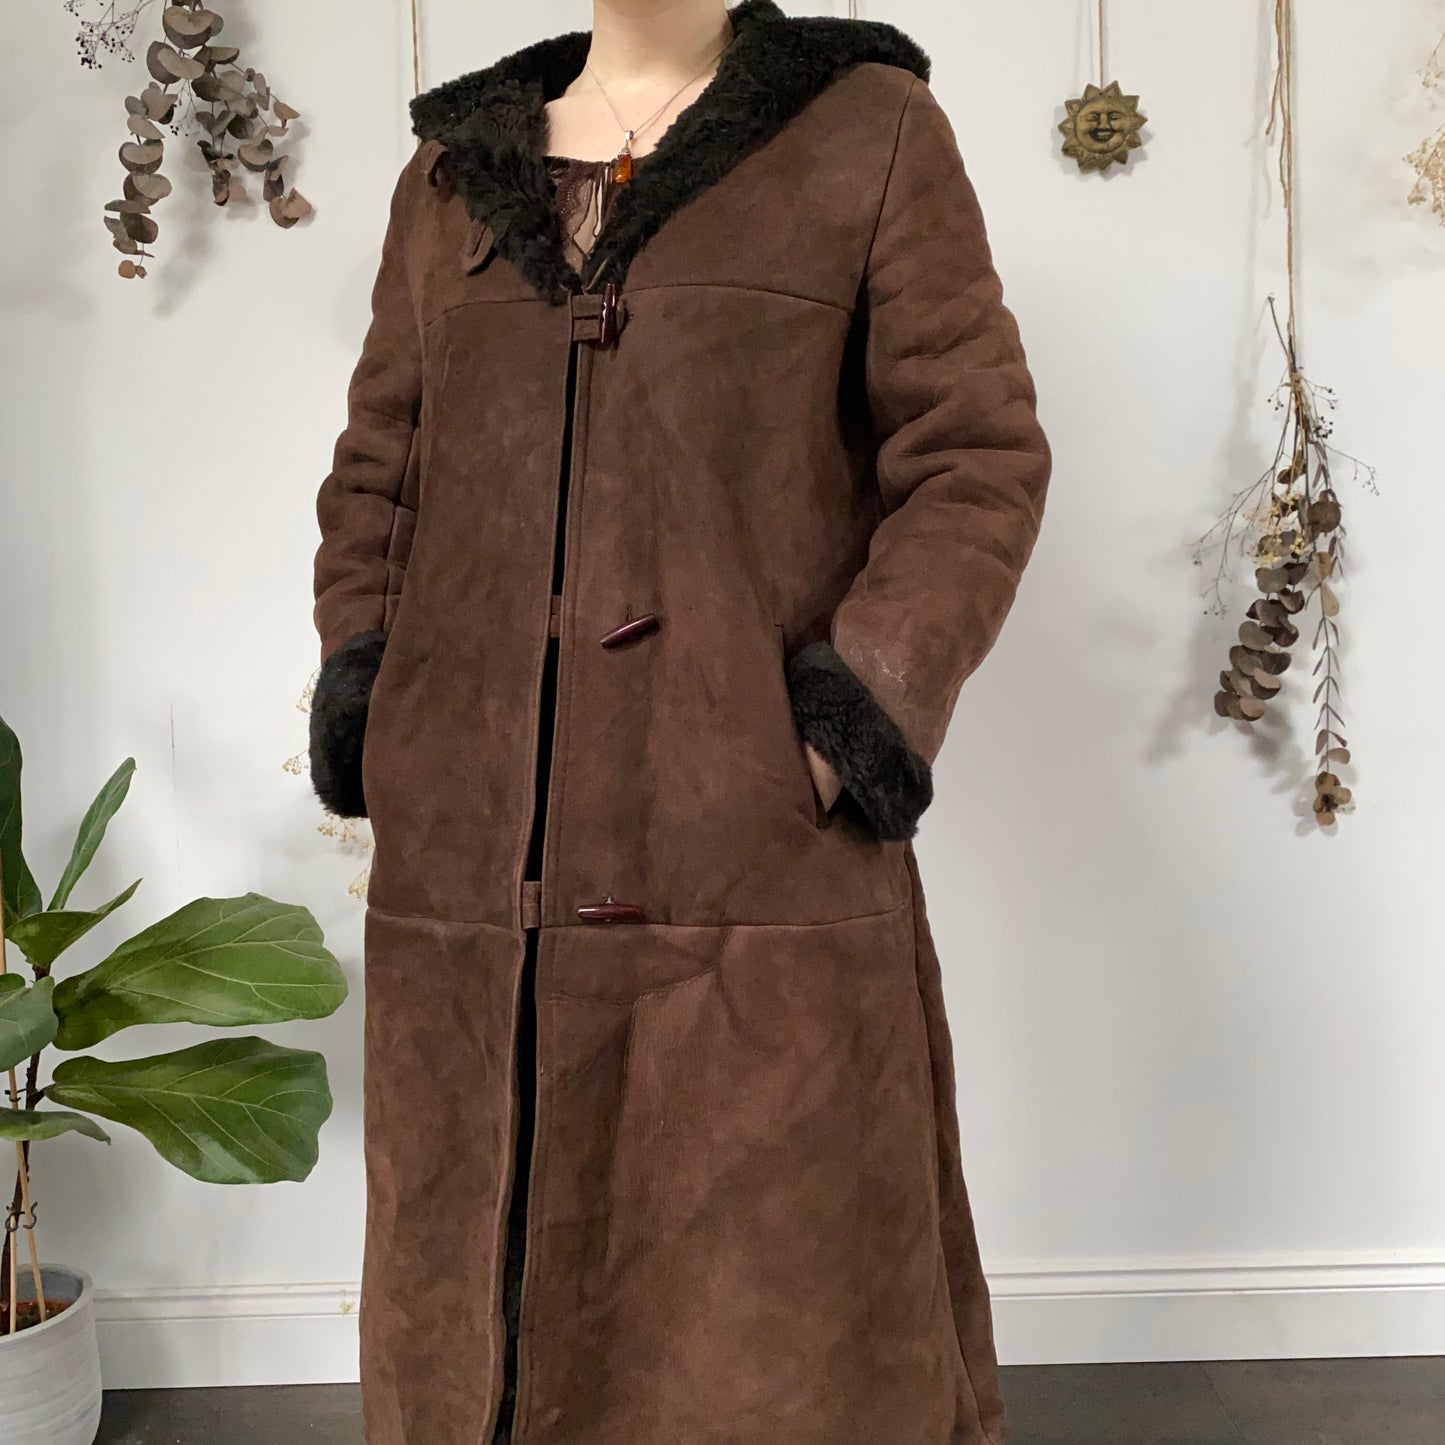 Brown sheepskin coat - size M/L